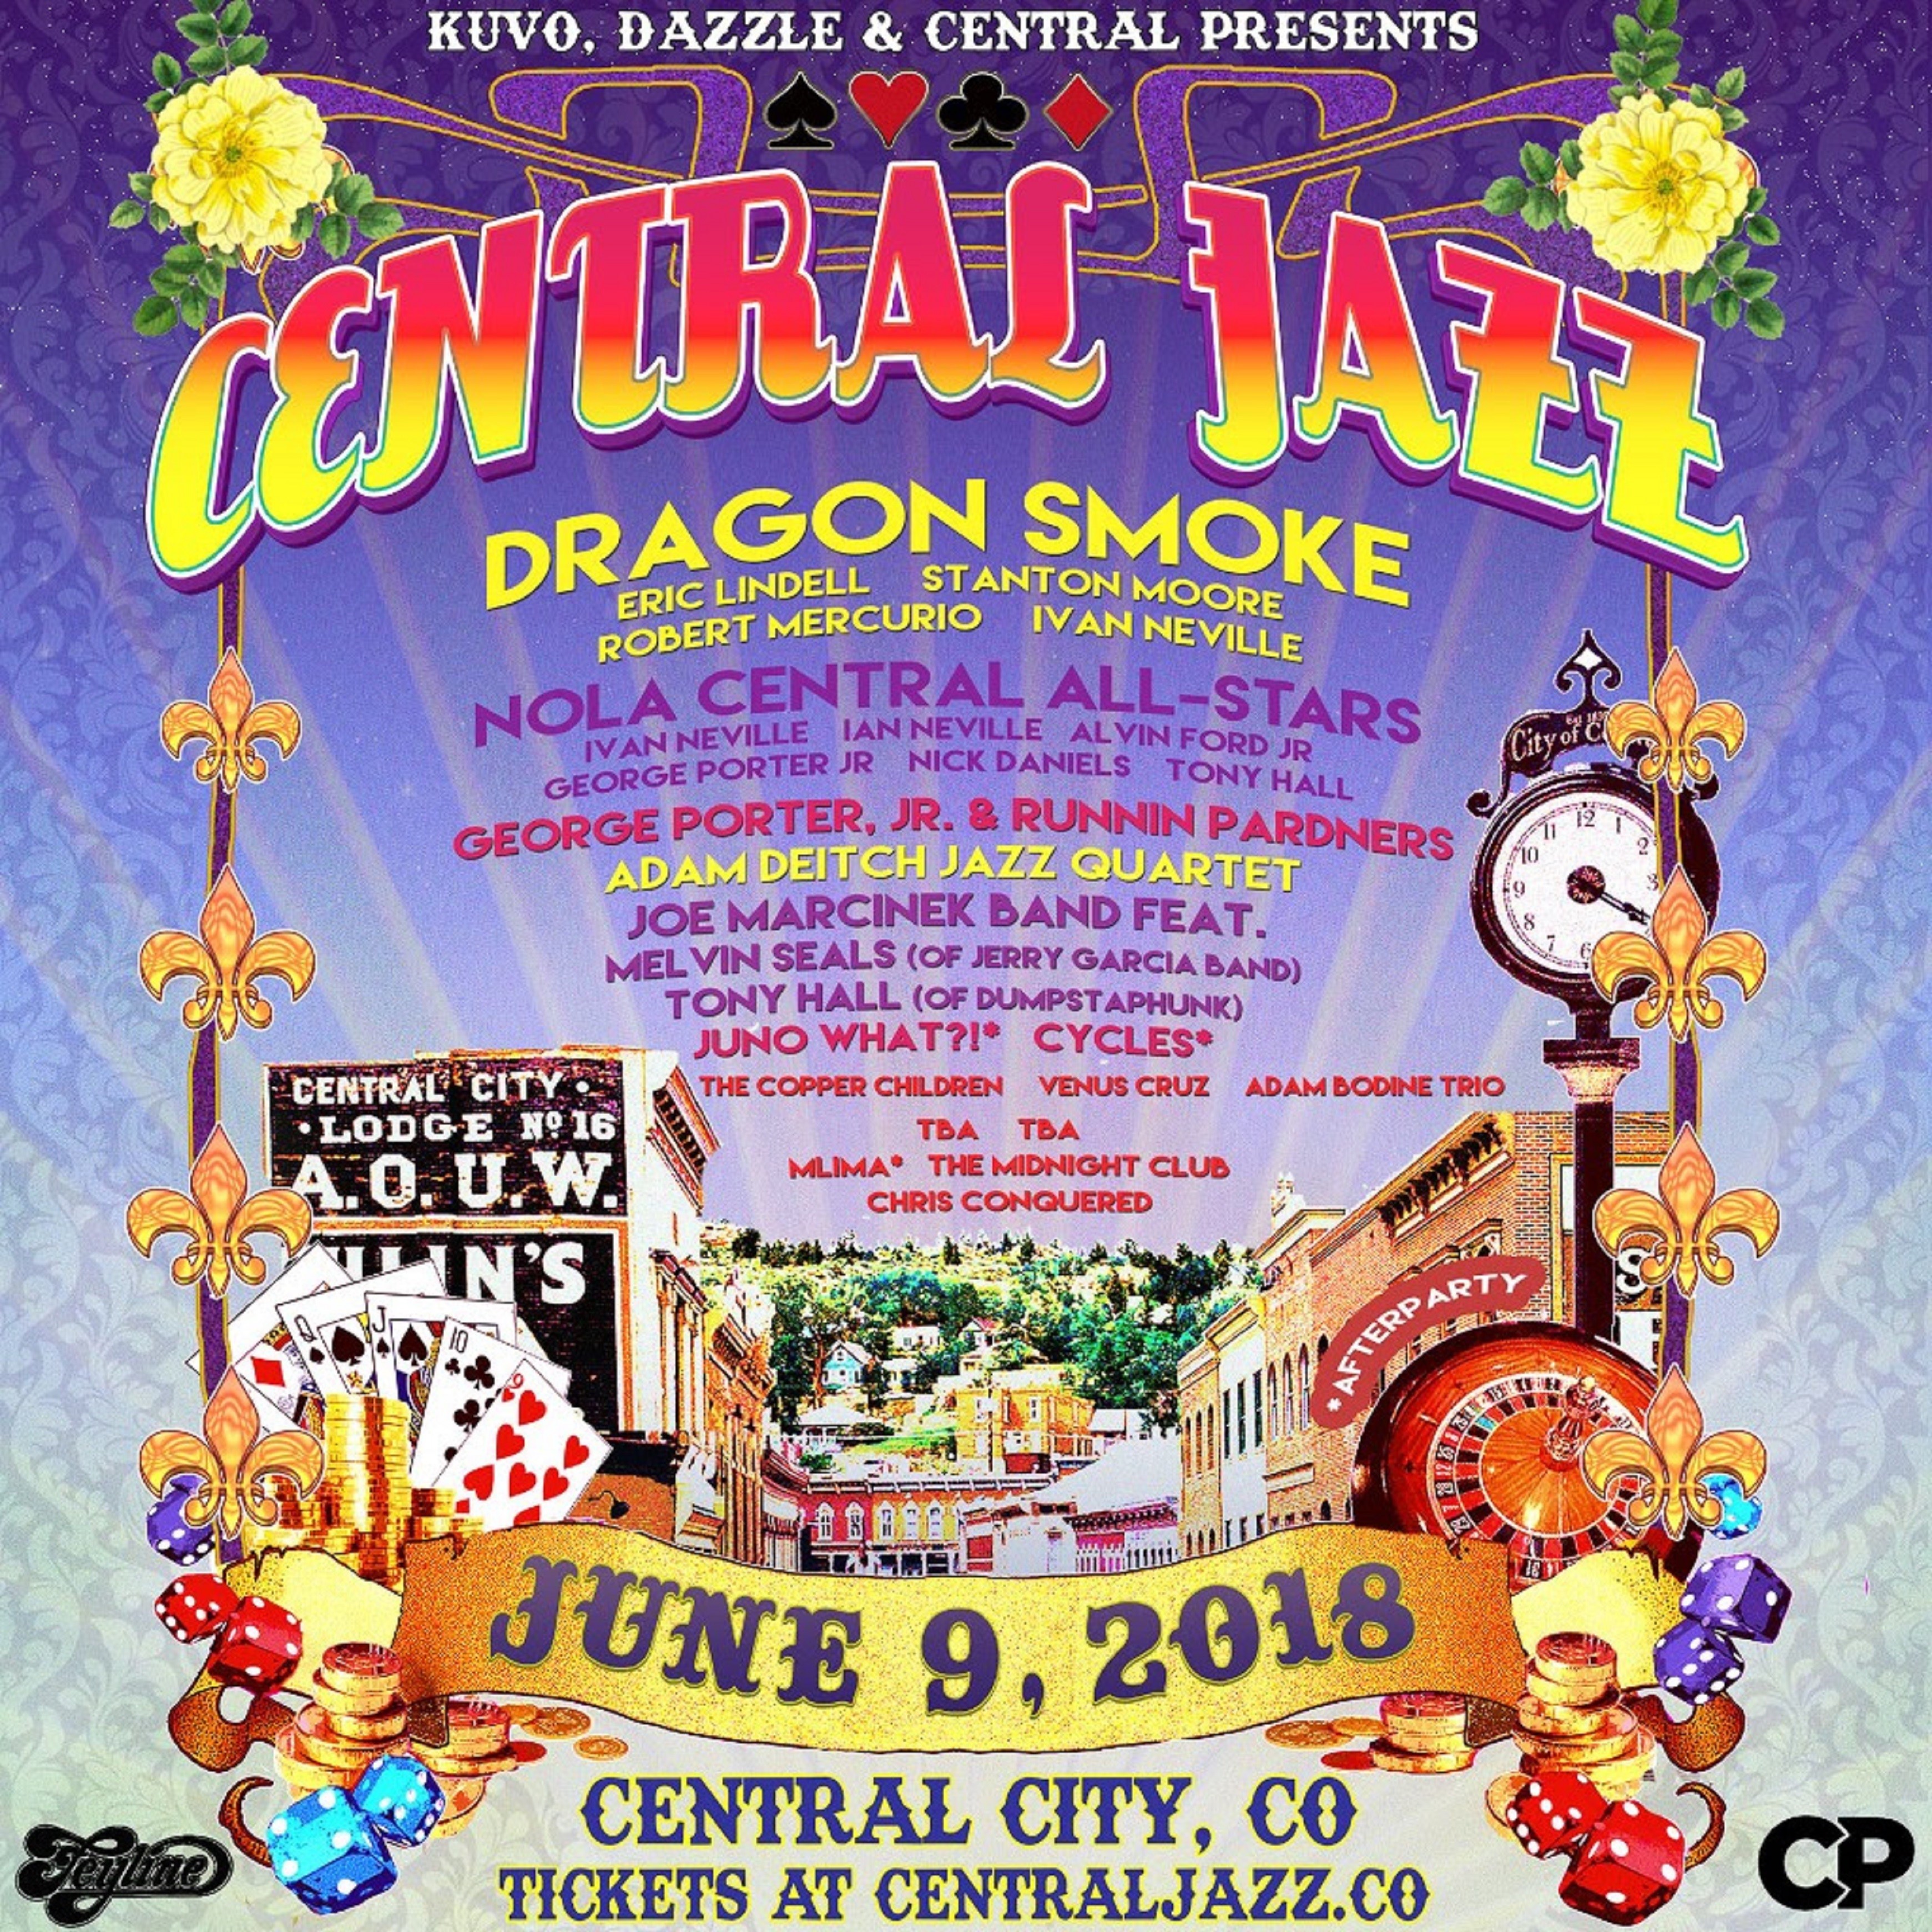 Central Jazz Festival June 19th!